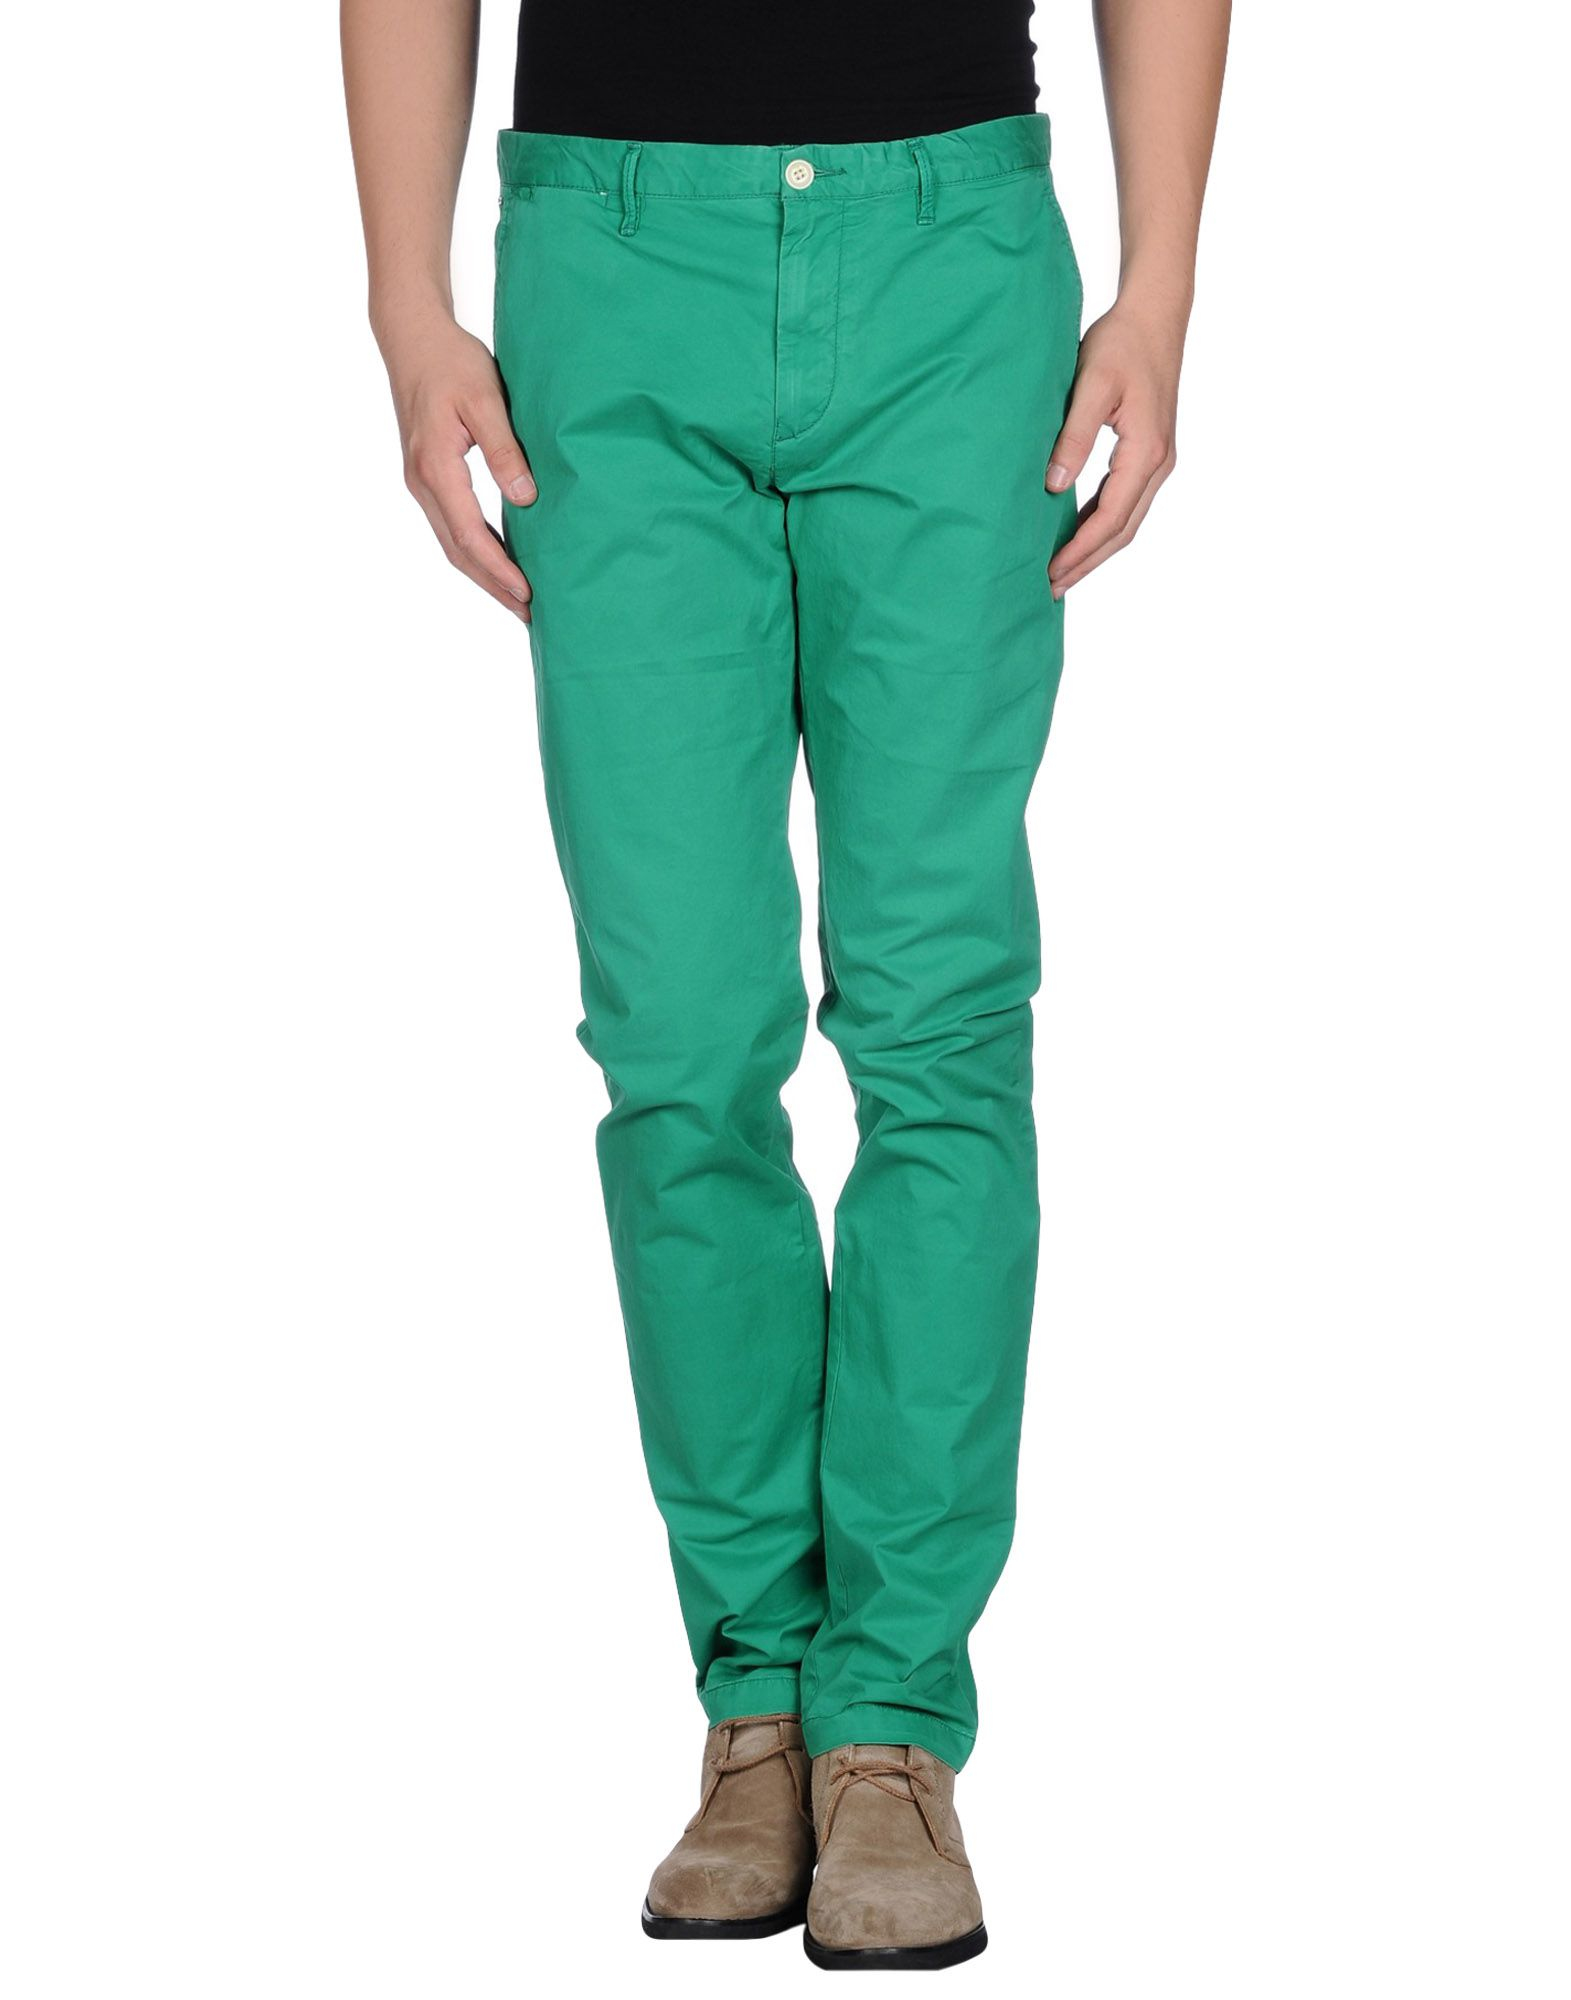 Scotch & Soda Cotton Casual Trouser in Green for Men - Lyst